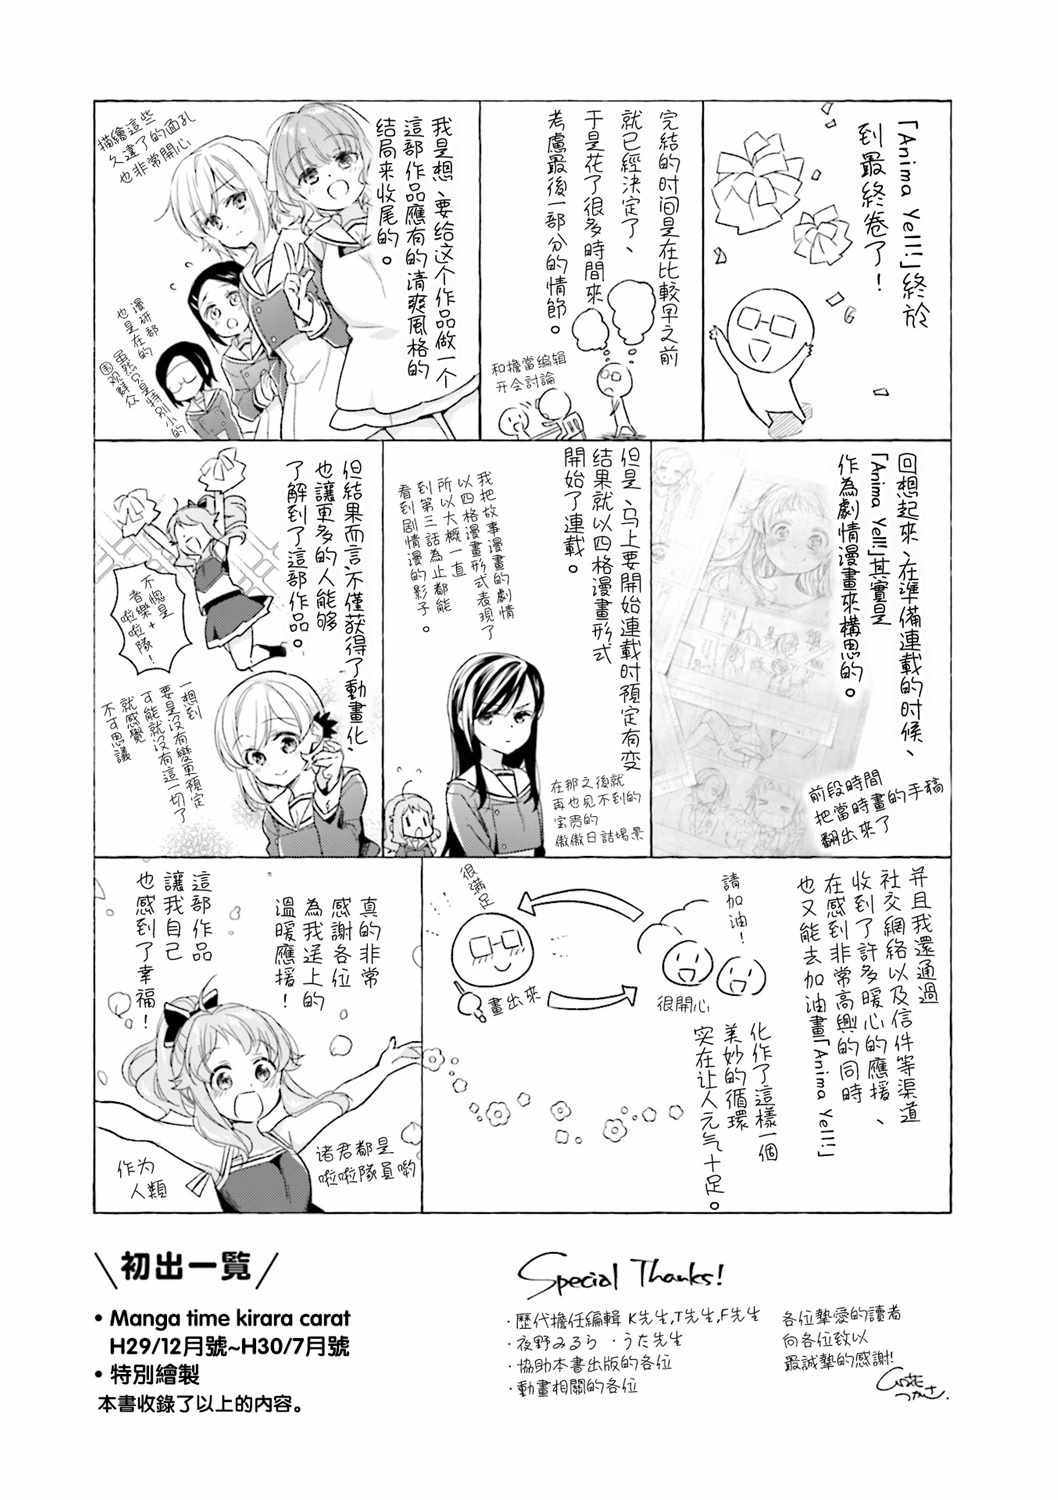 《Anima Yell!》漫画 Anima Yell 05卷后记